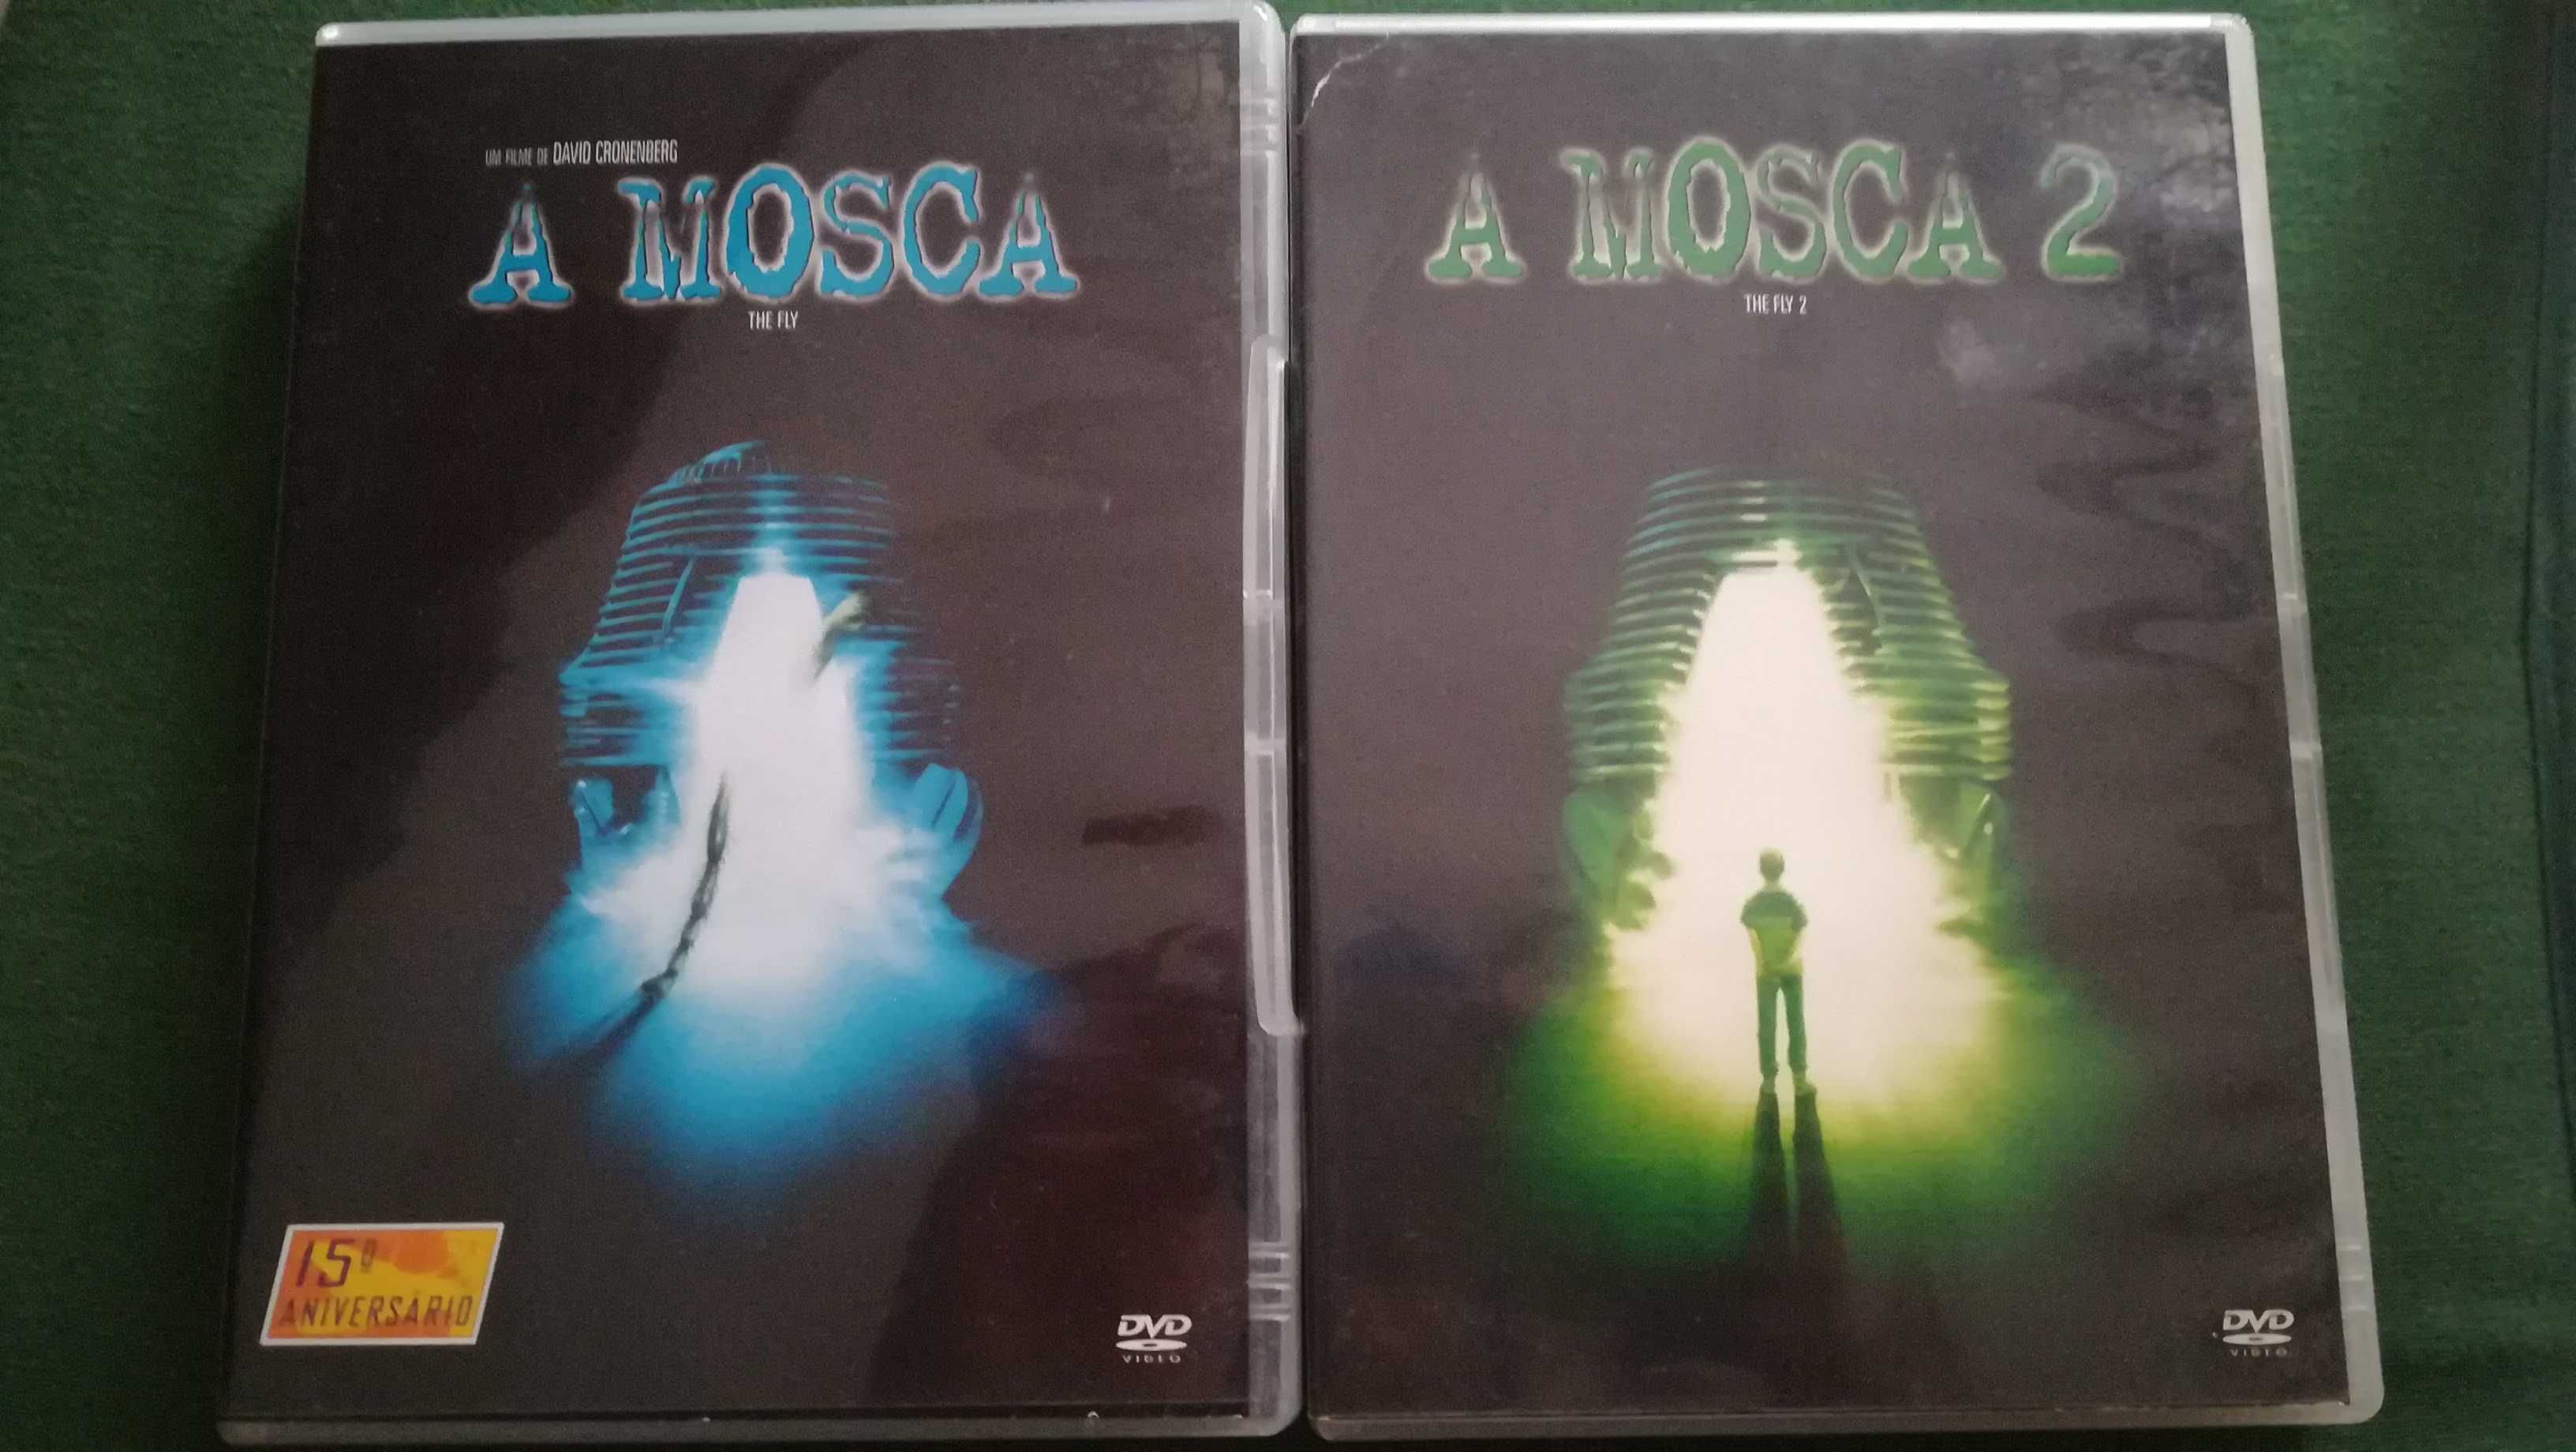 A Mosca 1 + A Mosca 2 - The Fly - David Cronenberg